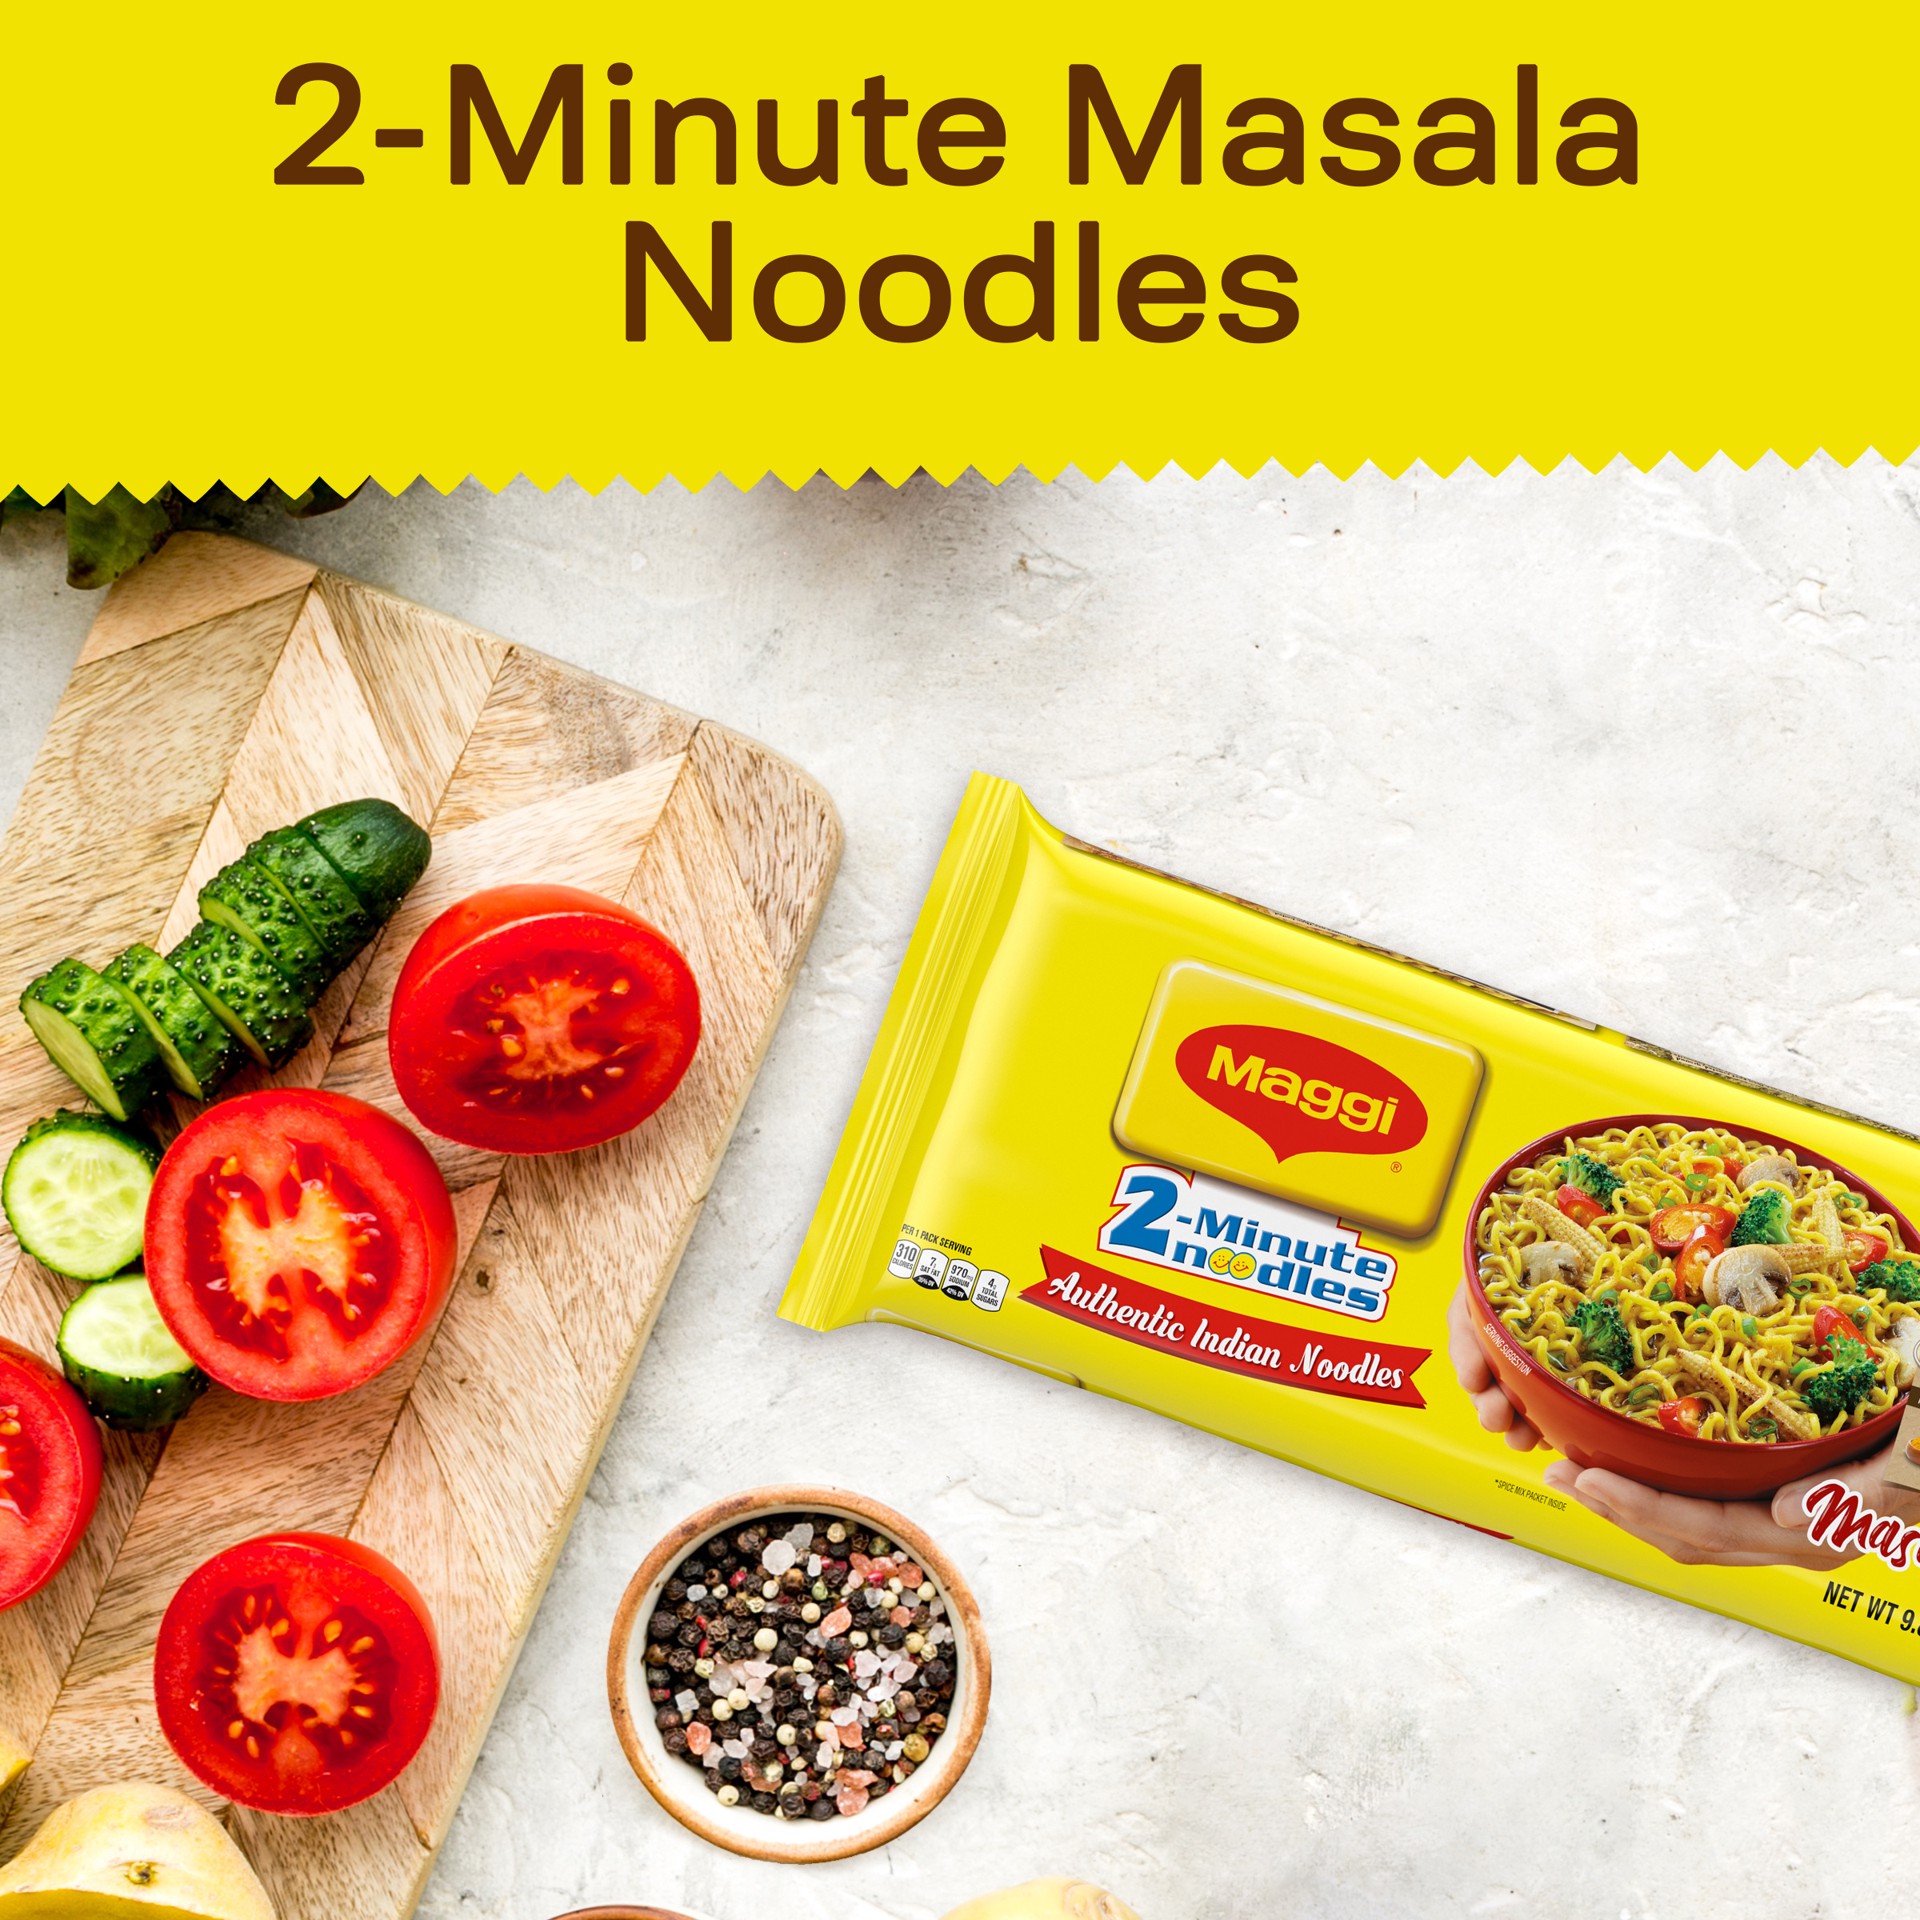 Maggi 2-Minute Noodles Masala 9.87 oz (280g) English 9 oz